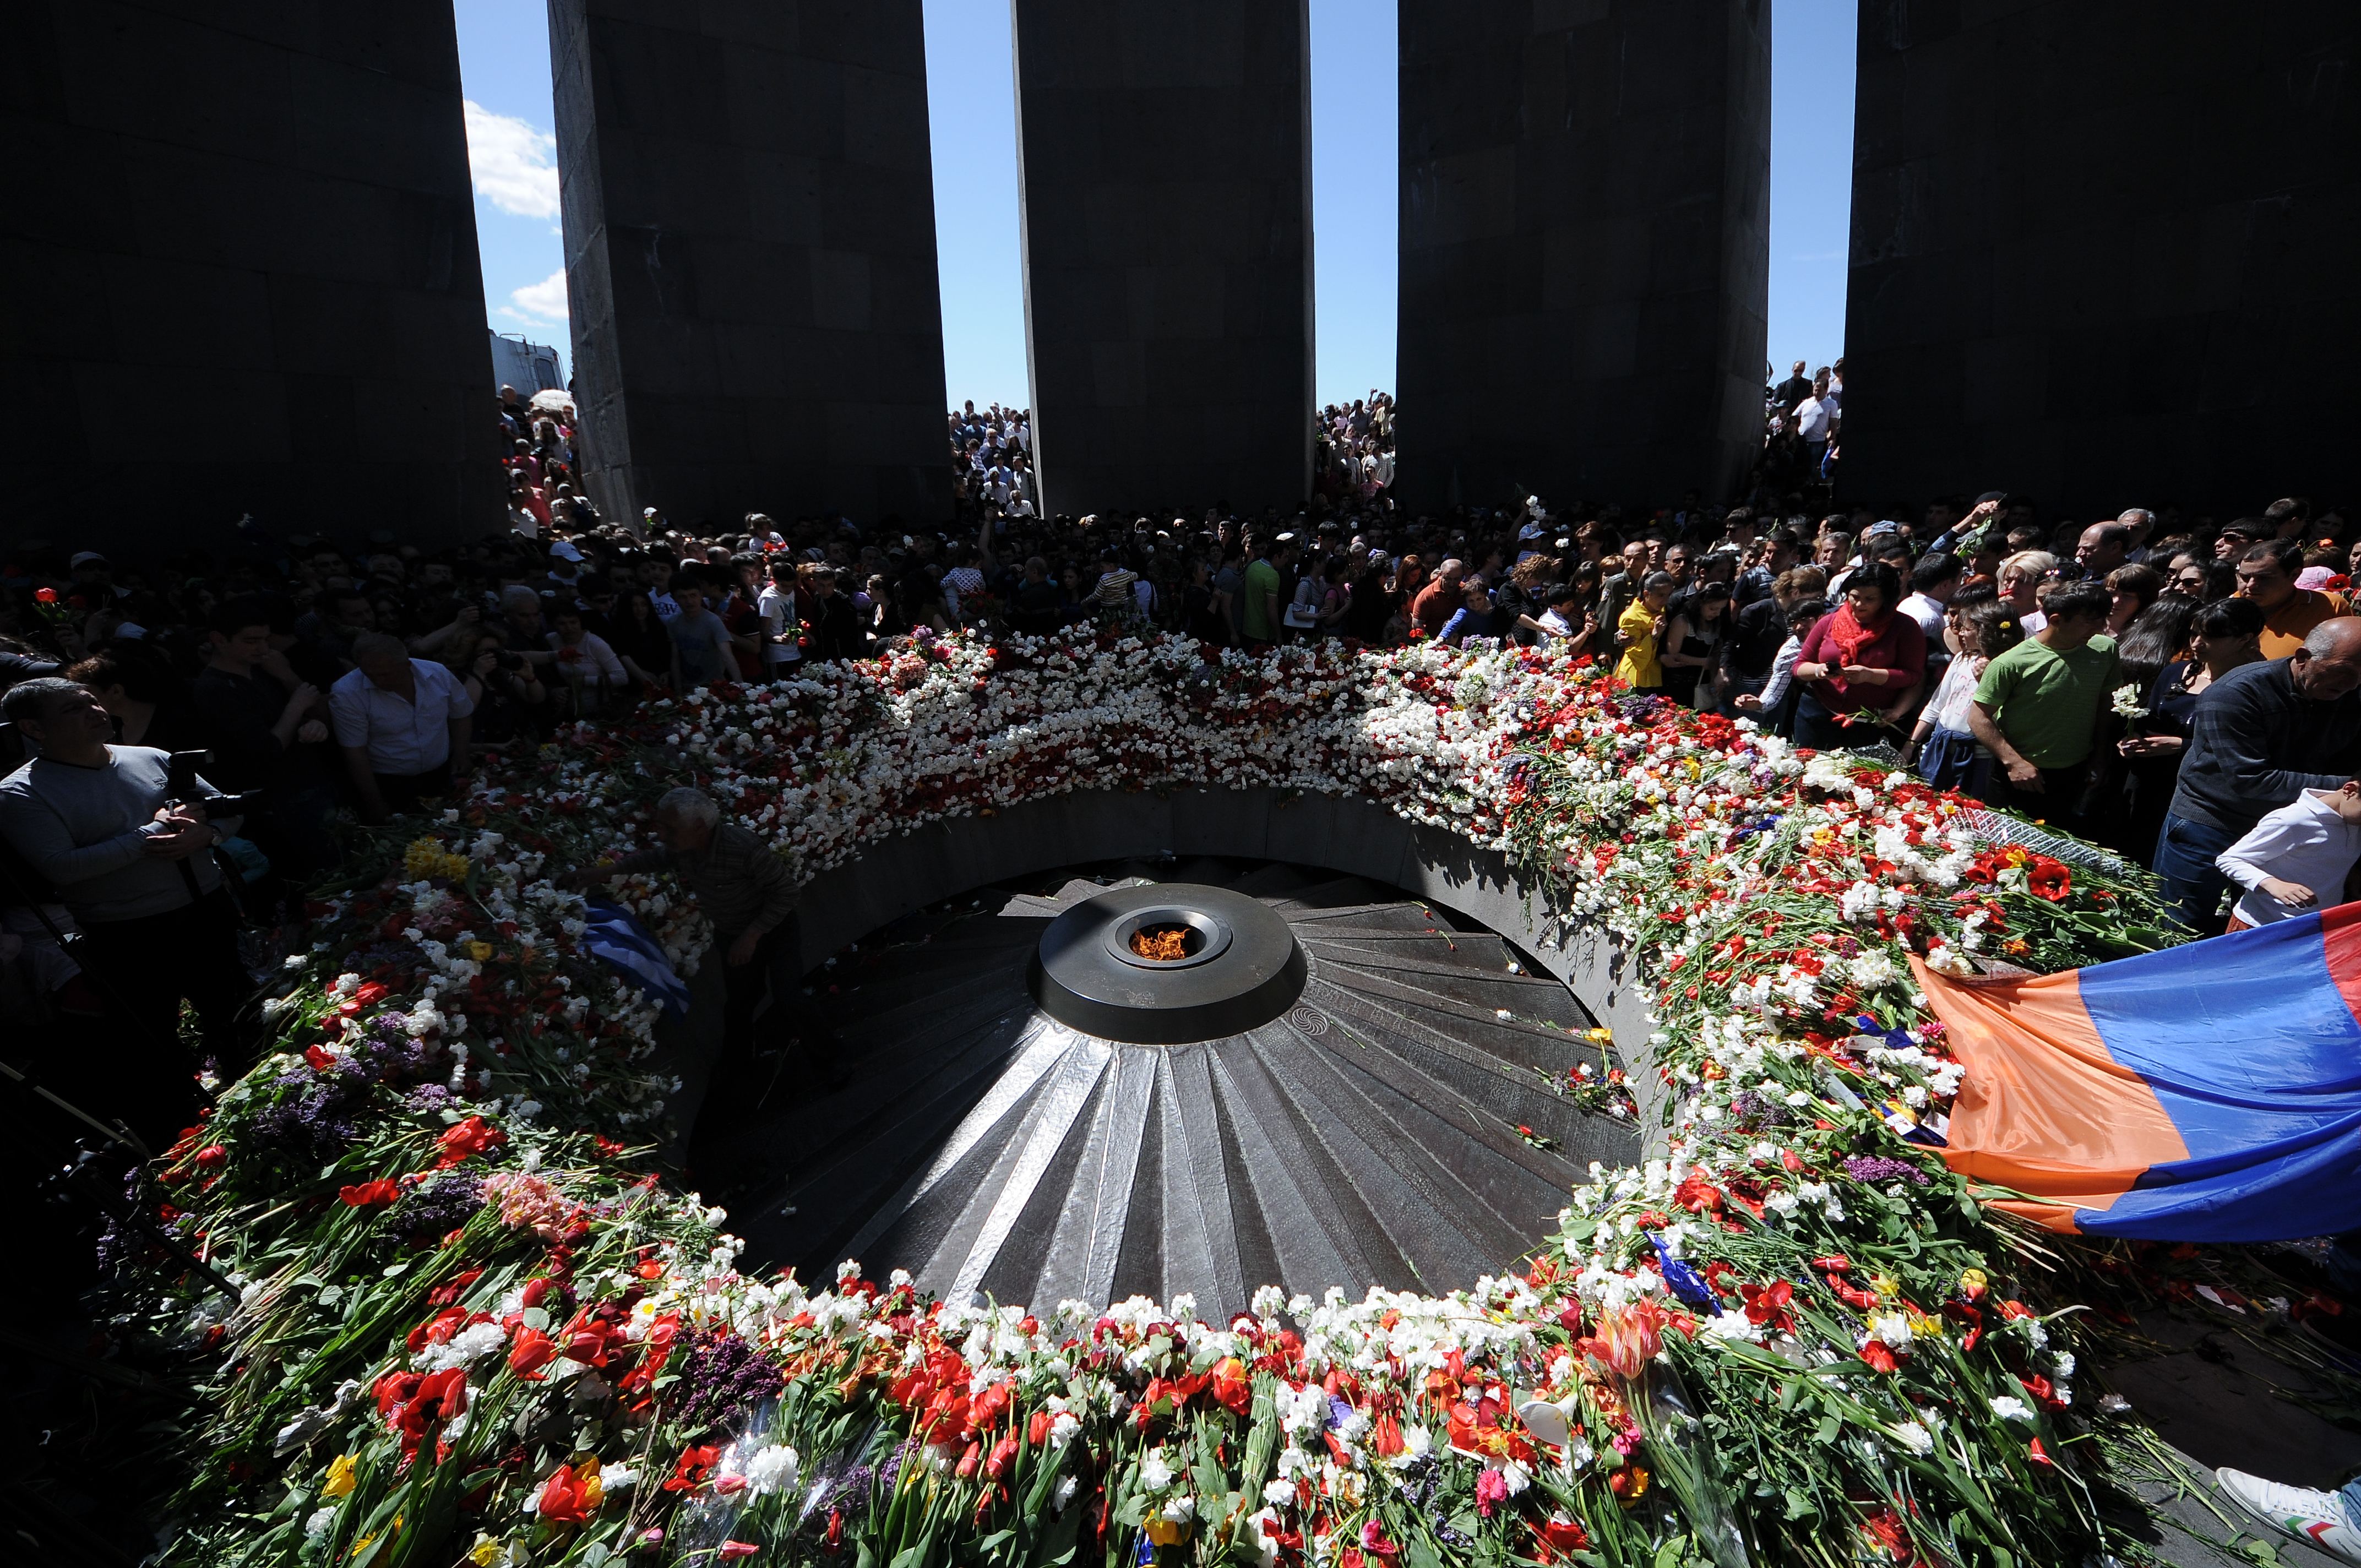 #ArmenianGenocide